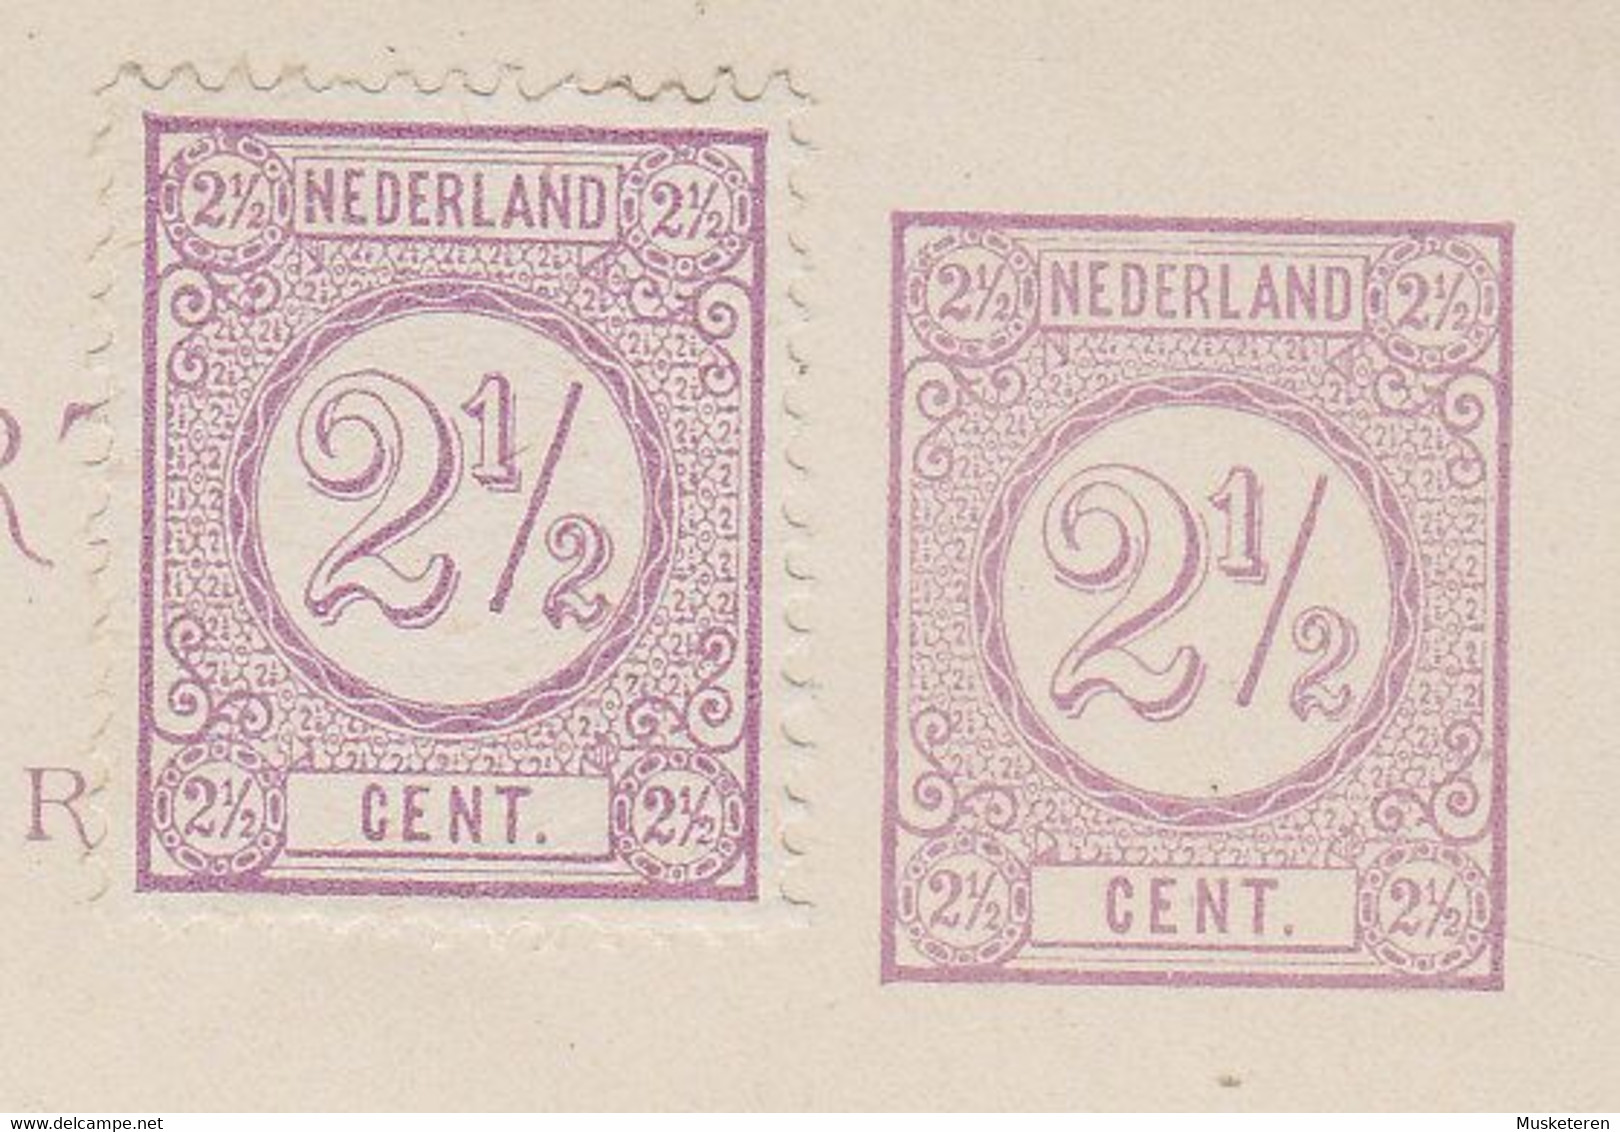 Netherlands Uprated Postal Stationery Ganzsache Entier Met Betaald Antwoord 1881 Uncancelled 2½c. Perf. 12½ (Cote 240€) - Unused Stamps